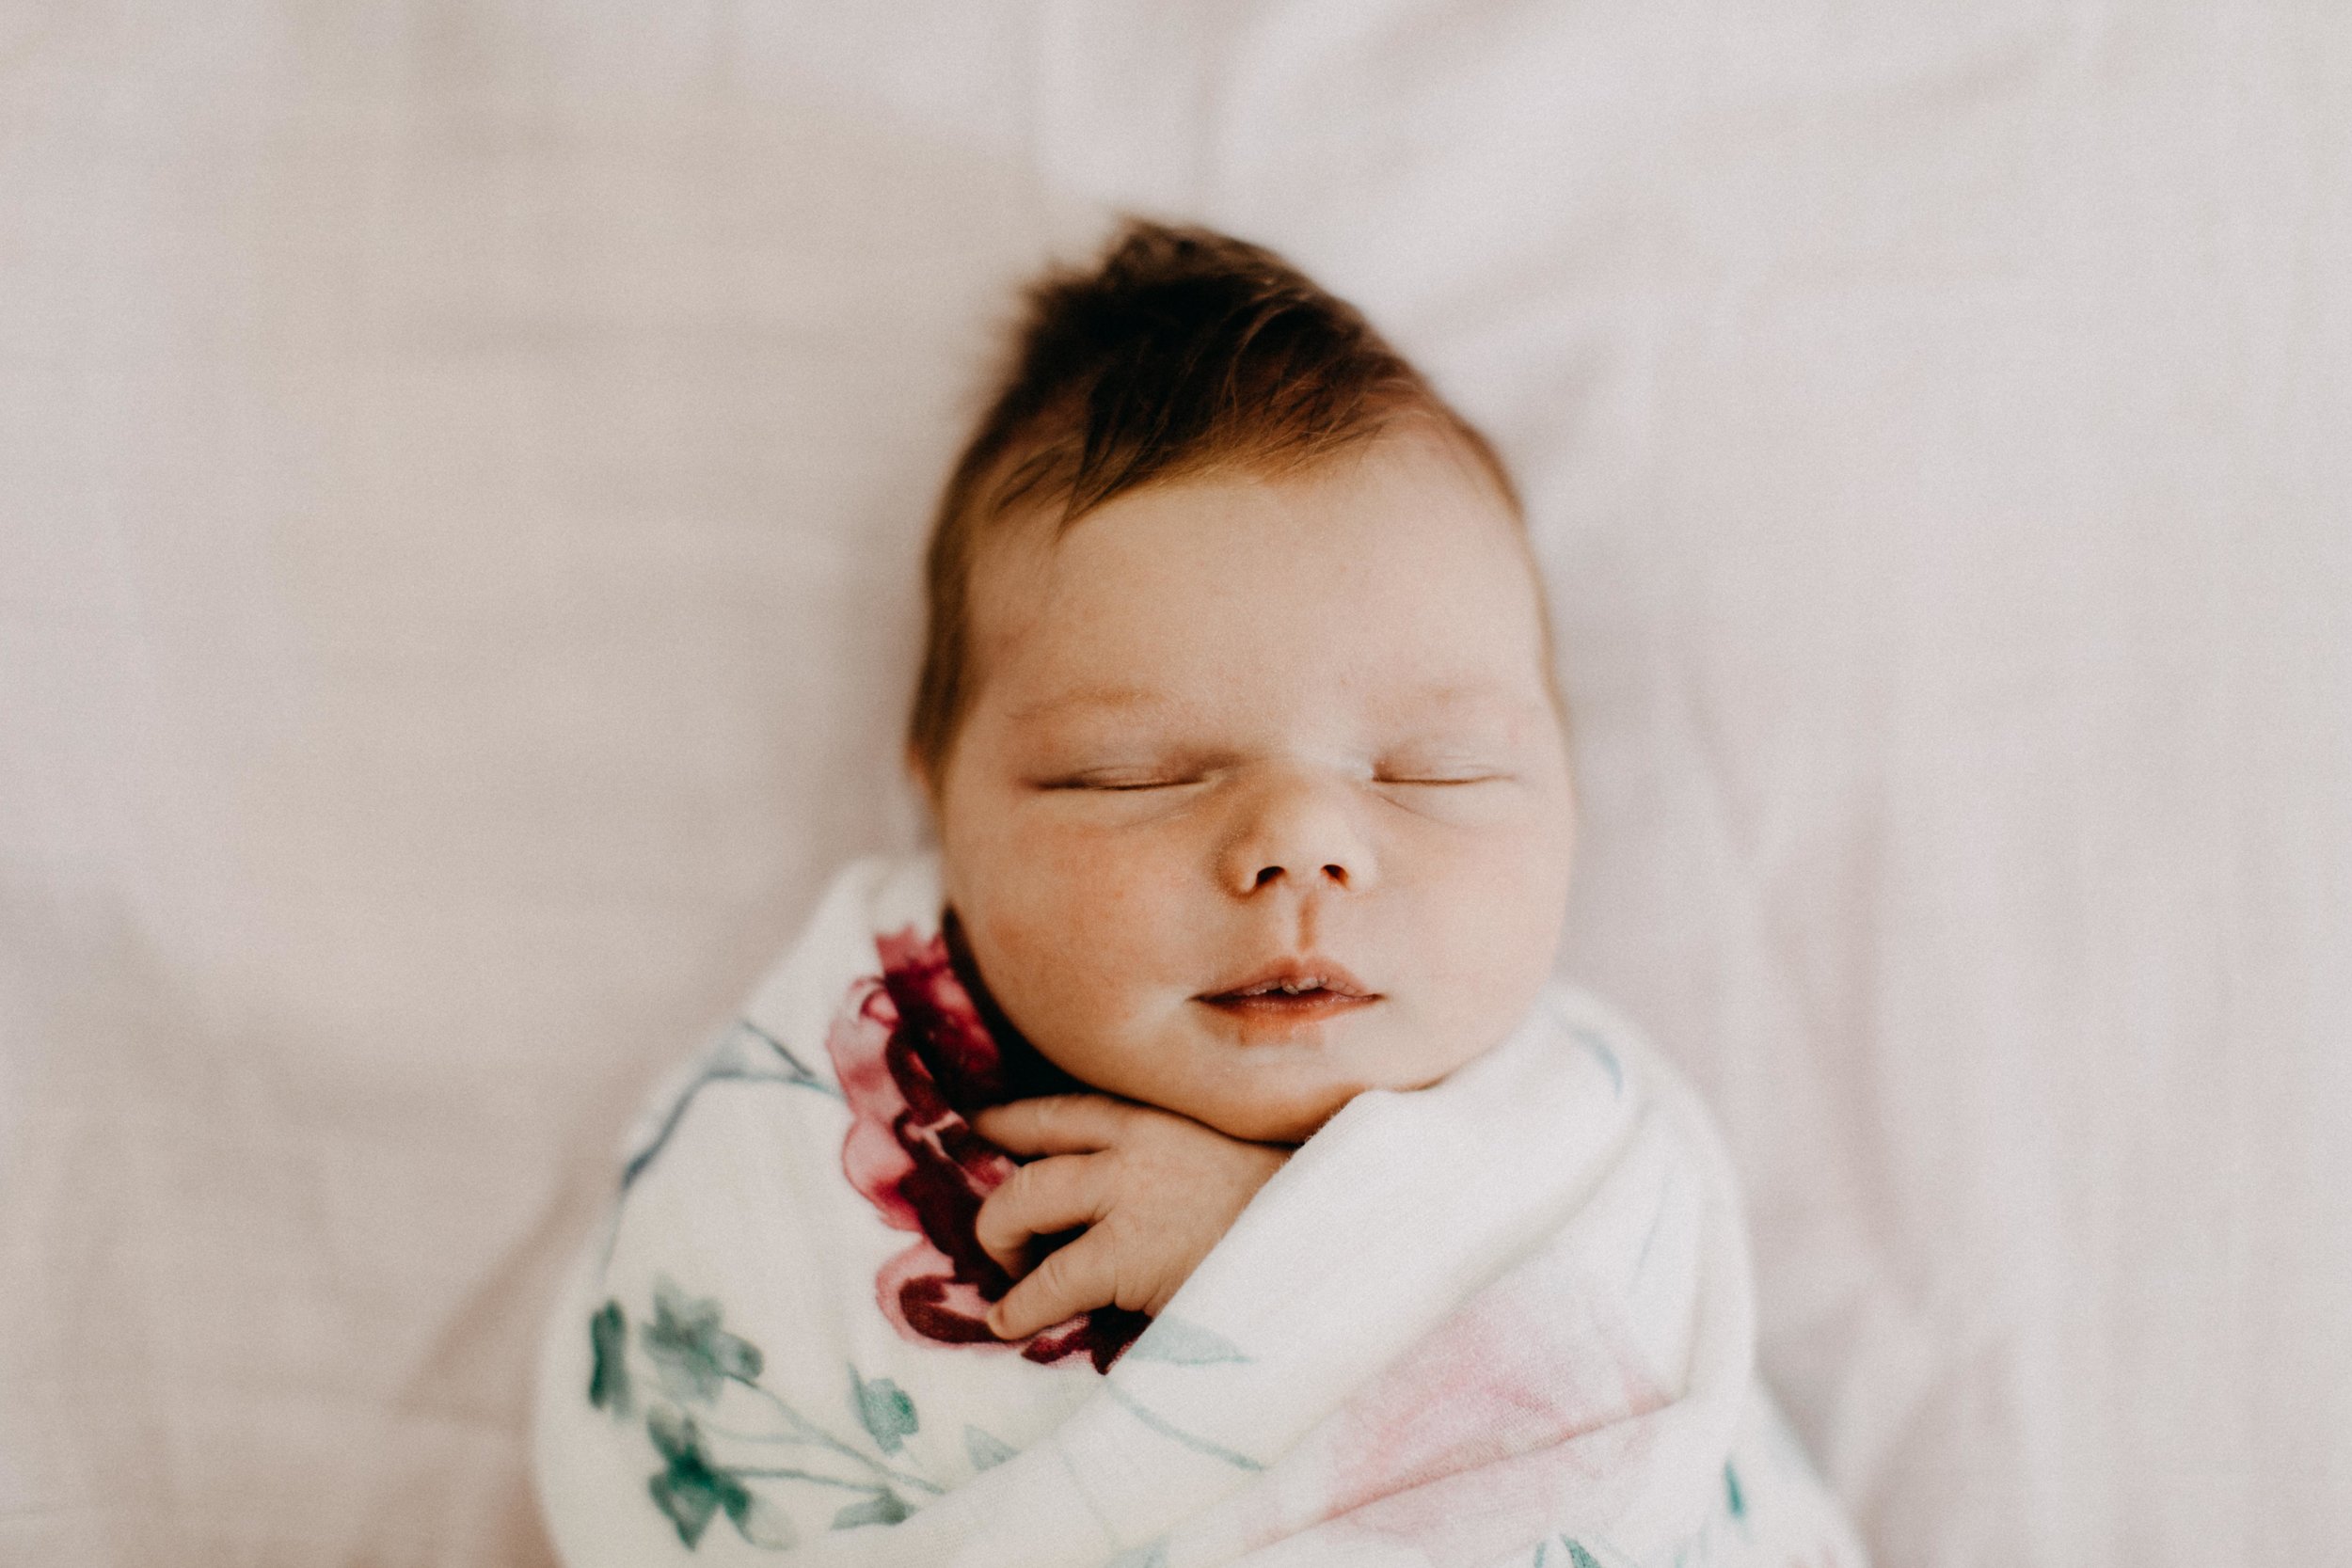 camden-newborn-photography-isobel-cobbitty-21.jpg